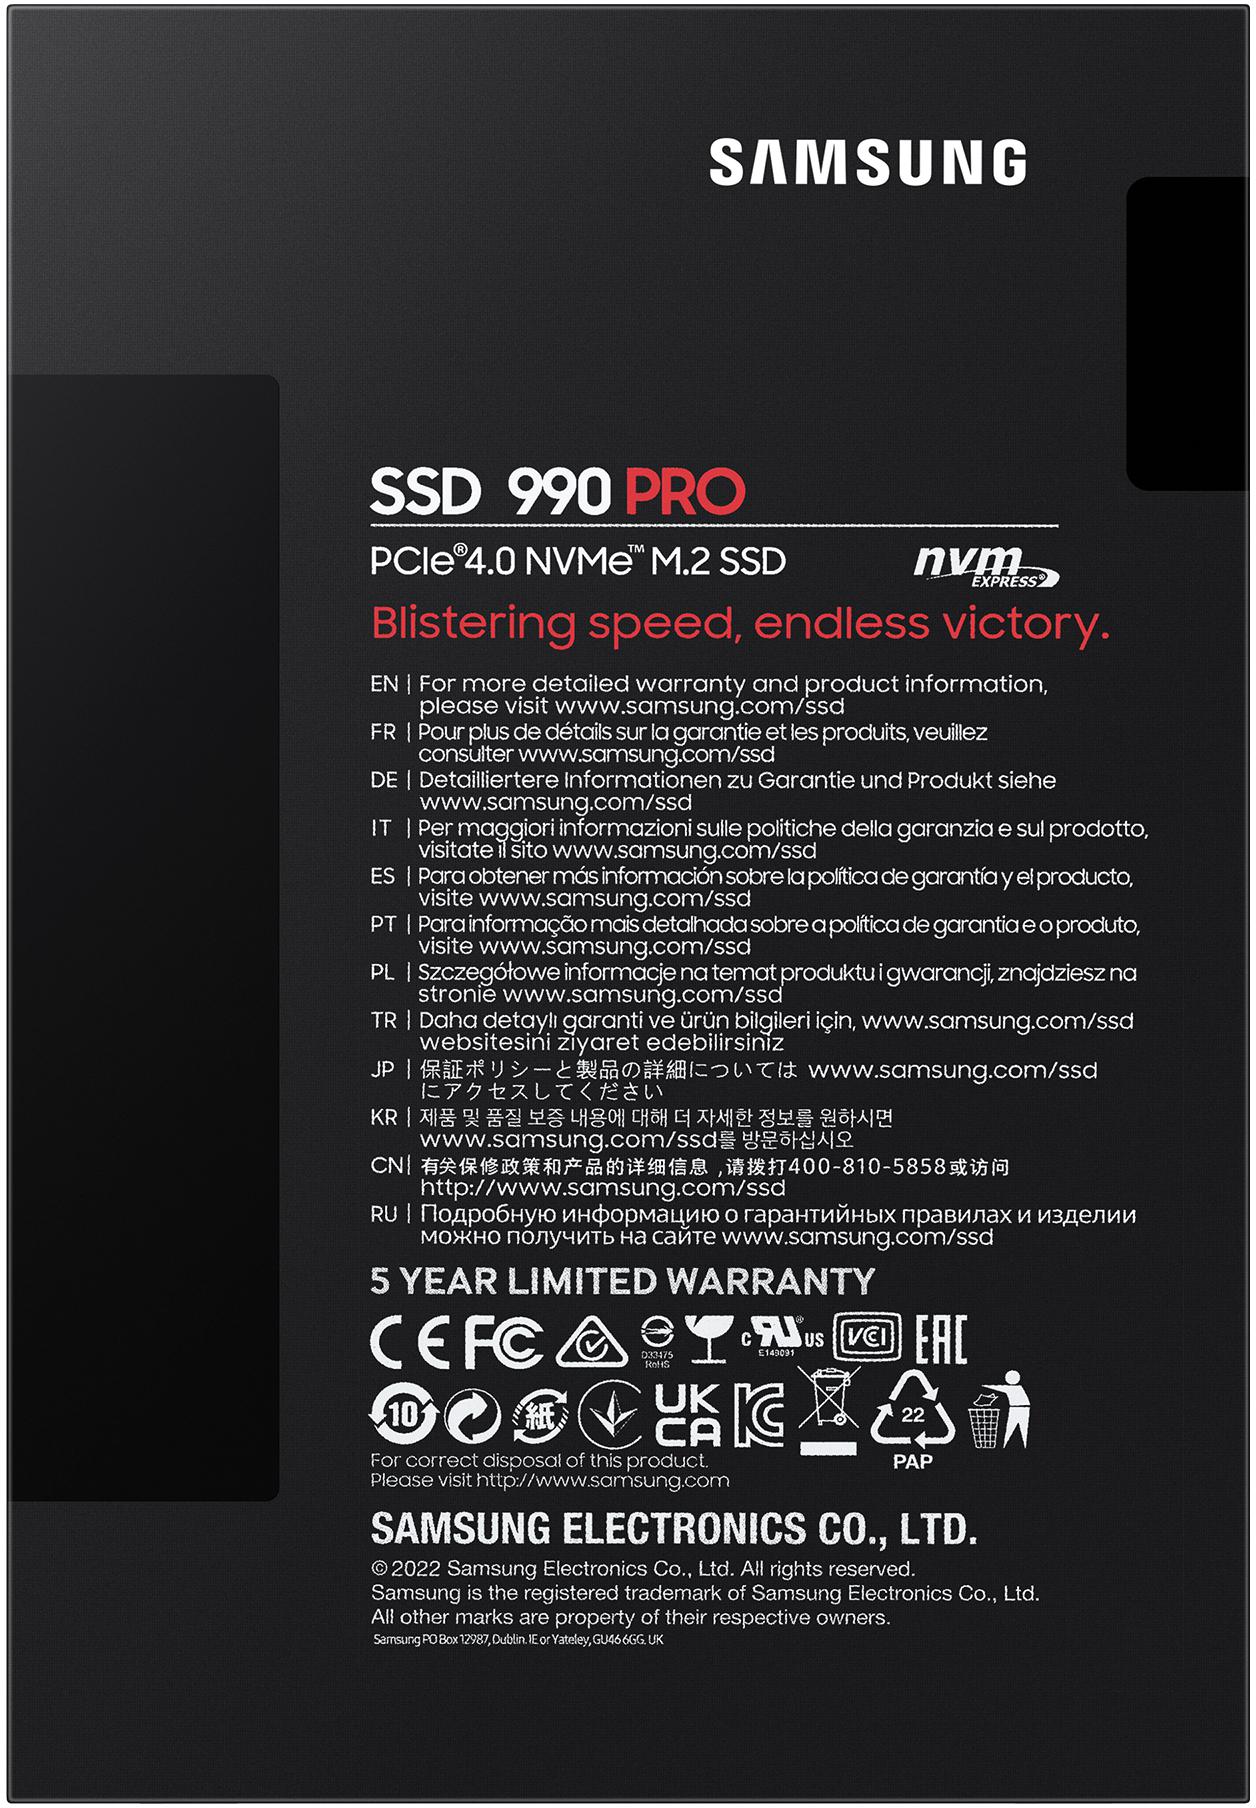 Samsung - SSD Samsung 990 PRO 4TB Gen4 M.2 NVMe (7450/6900MB/s)